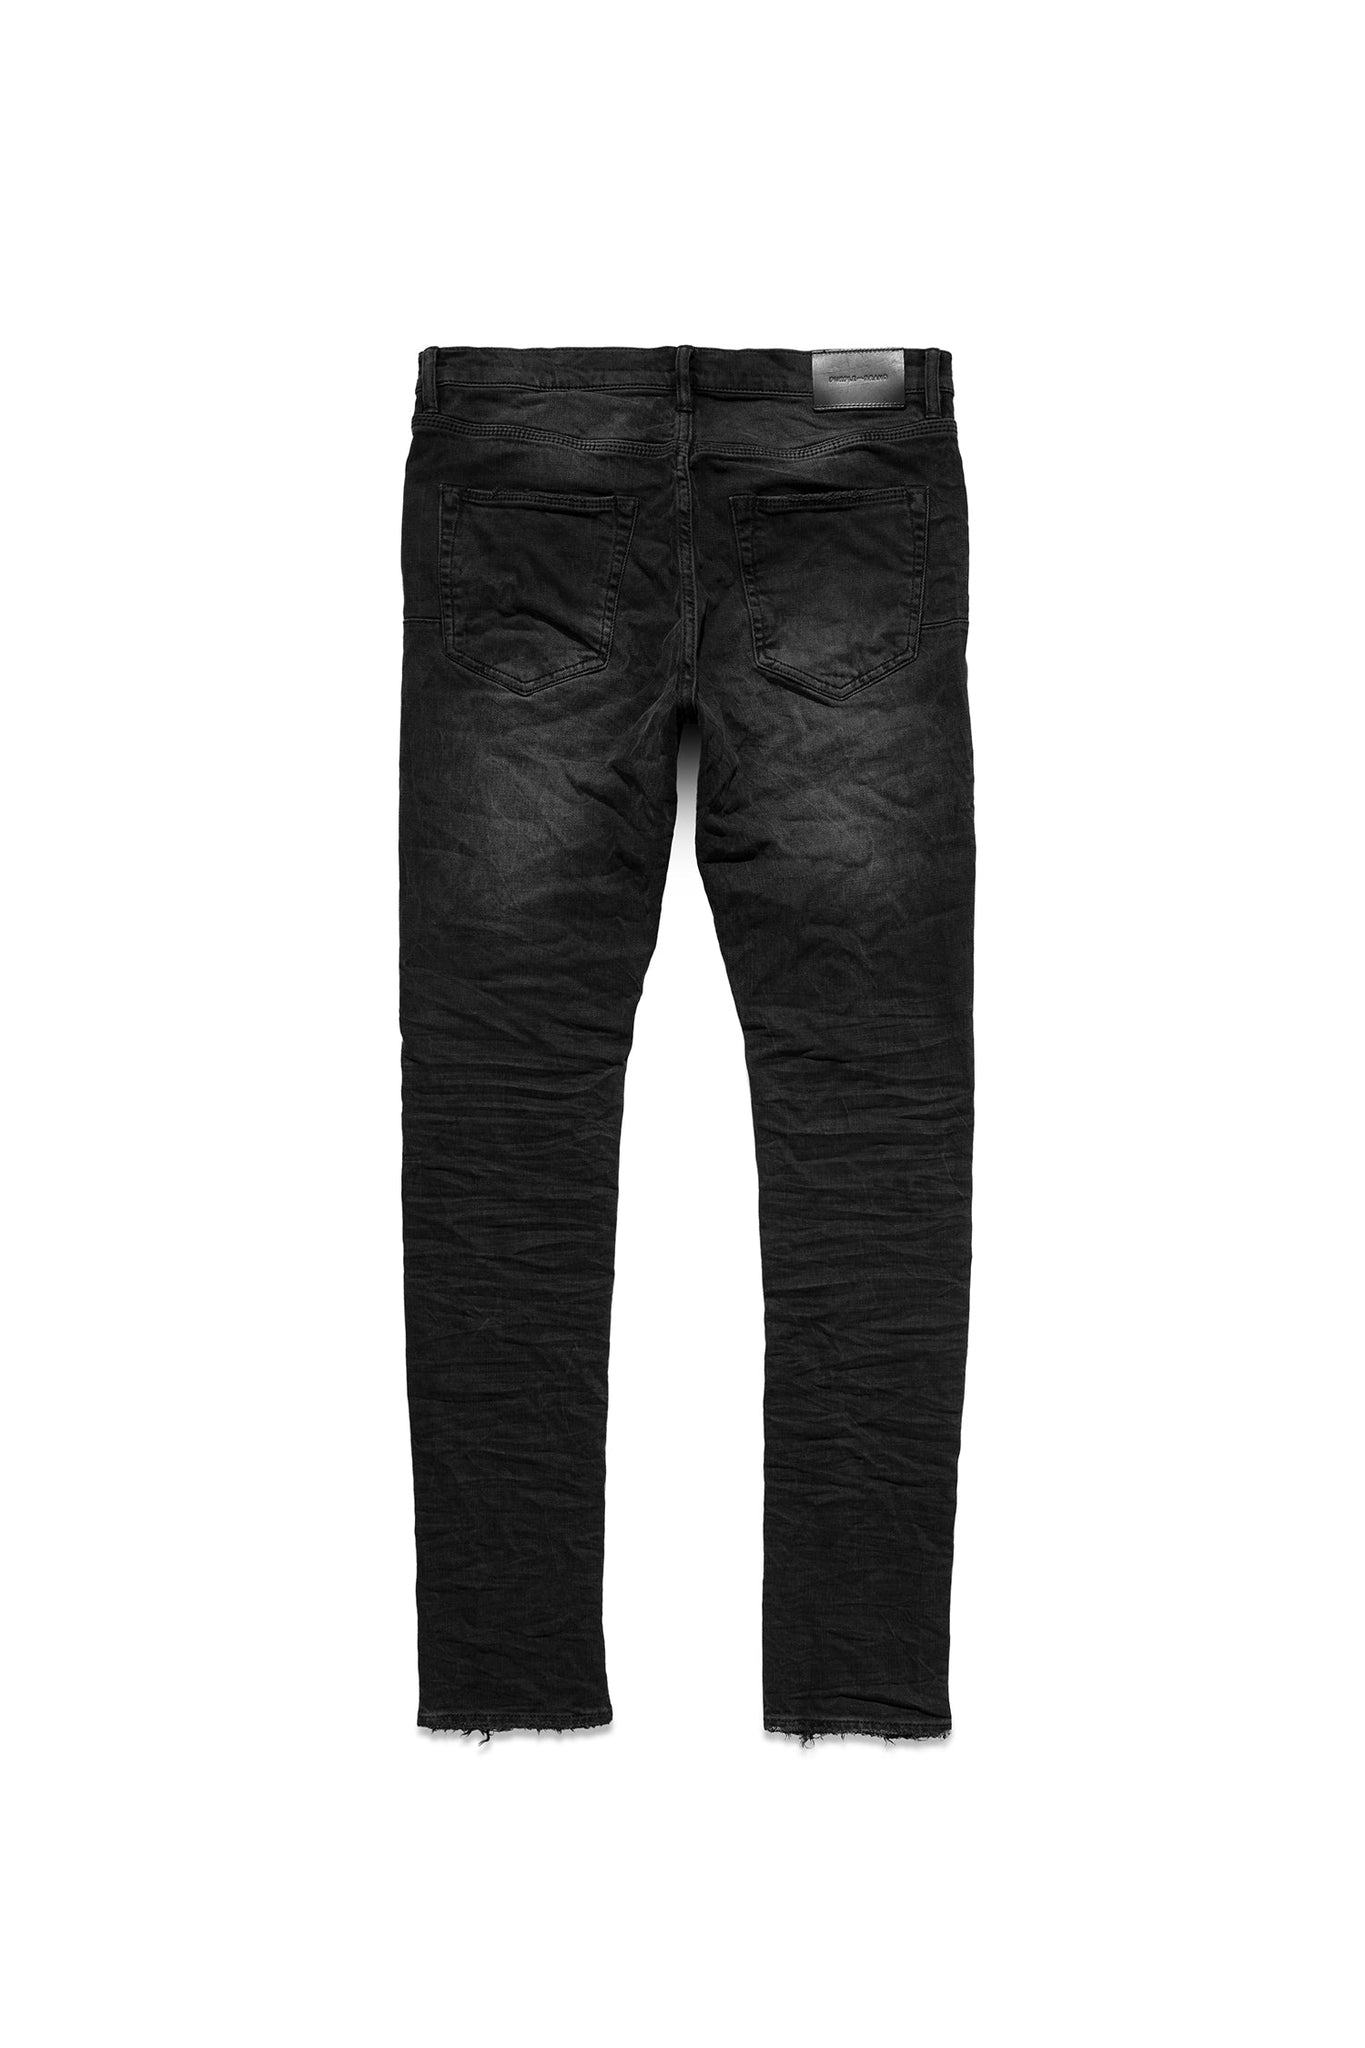 Purple Brand Jeans Mens Size 36 X 34 New Slim Fit Low Rise P001